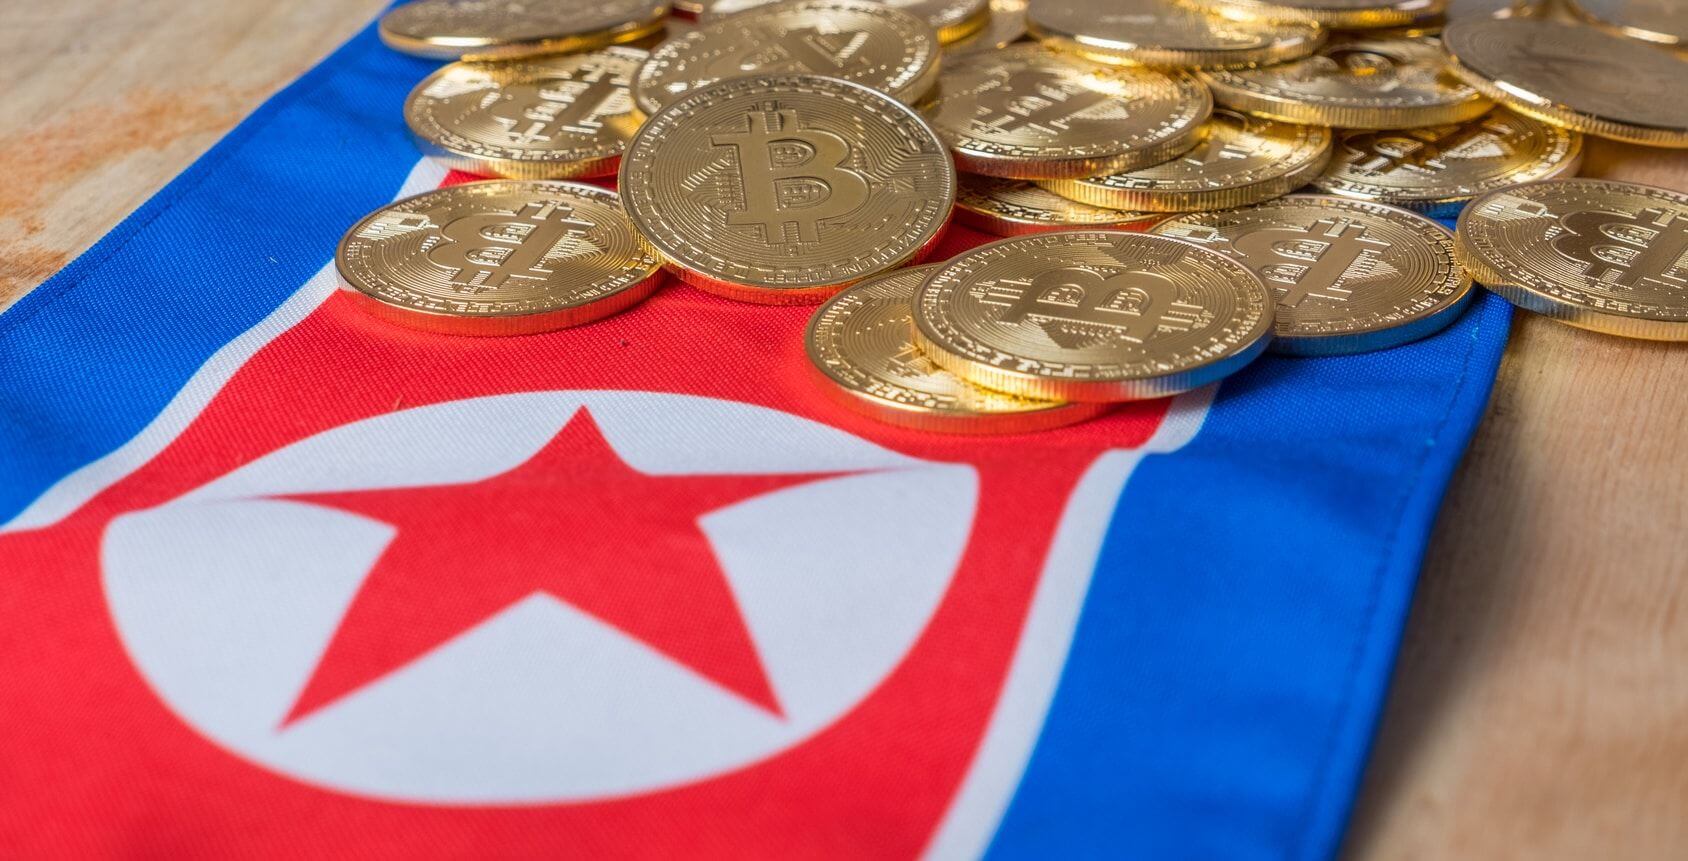 North Korean cryptocurrency rumours